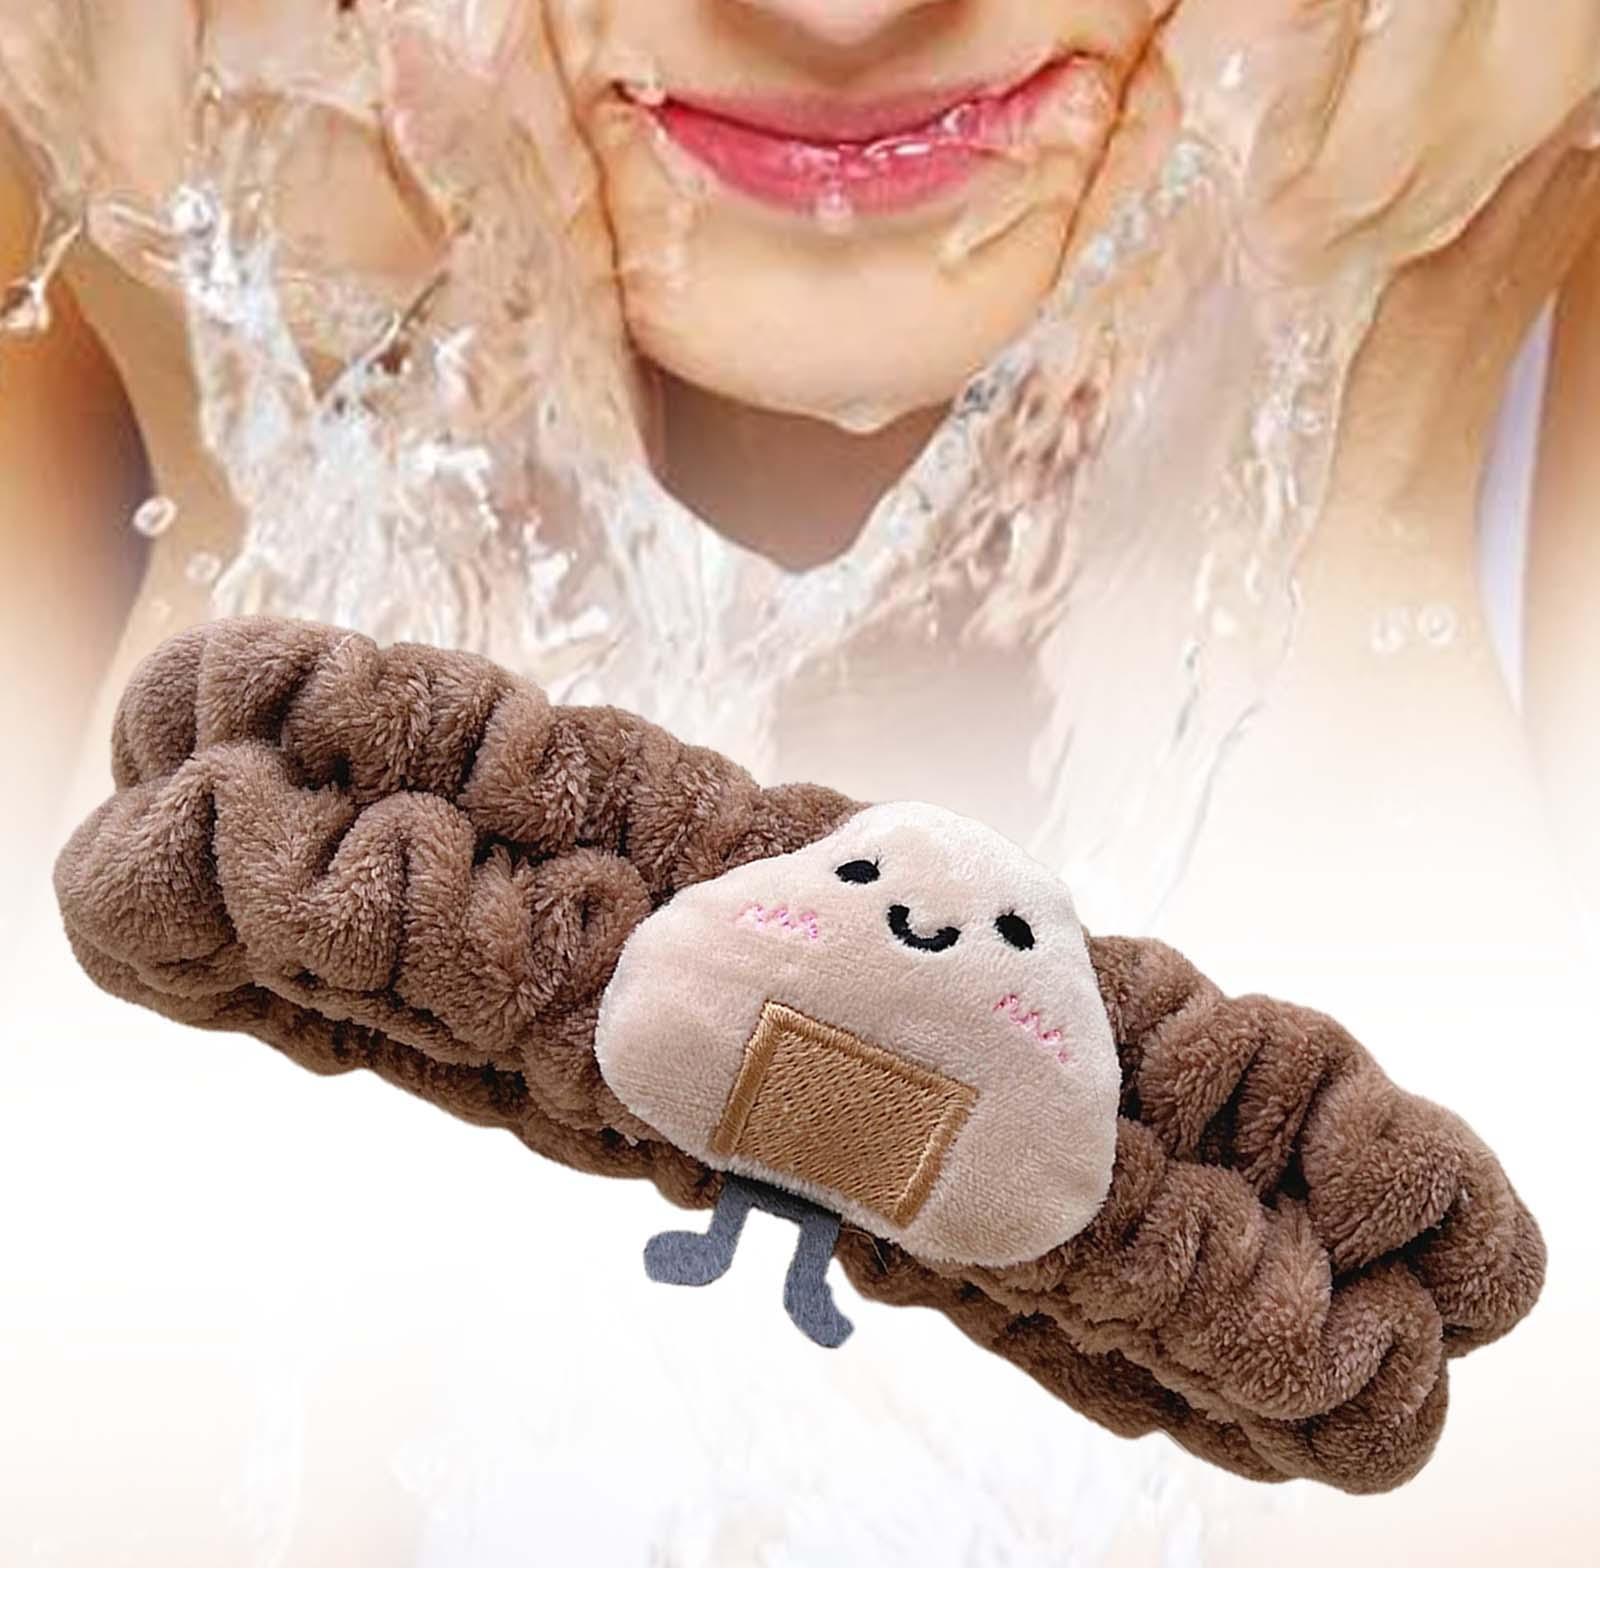 SPA Headband Stretchy Soft Make up Headband for Bathing Shower Washing Gifts